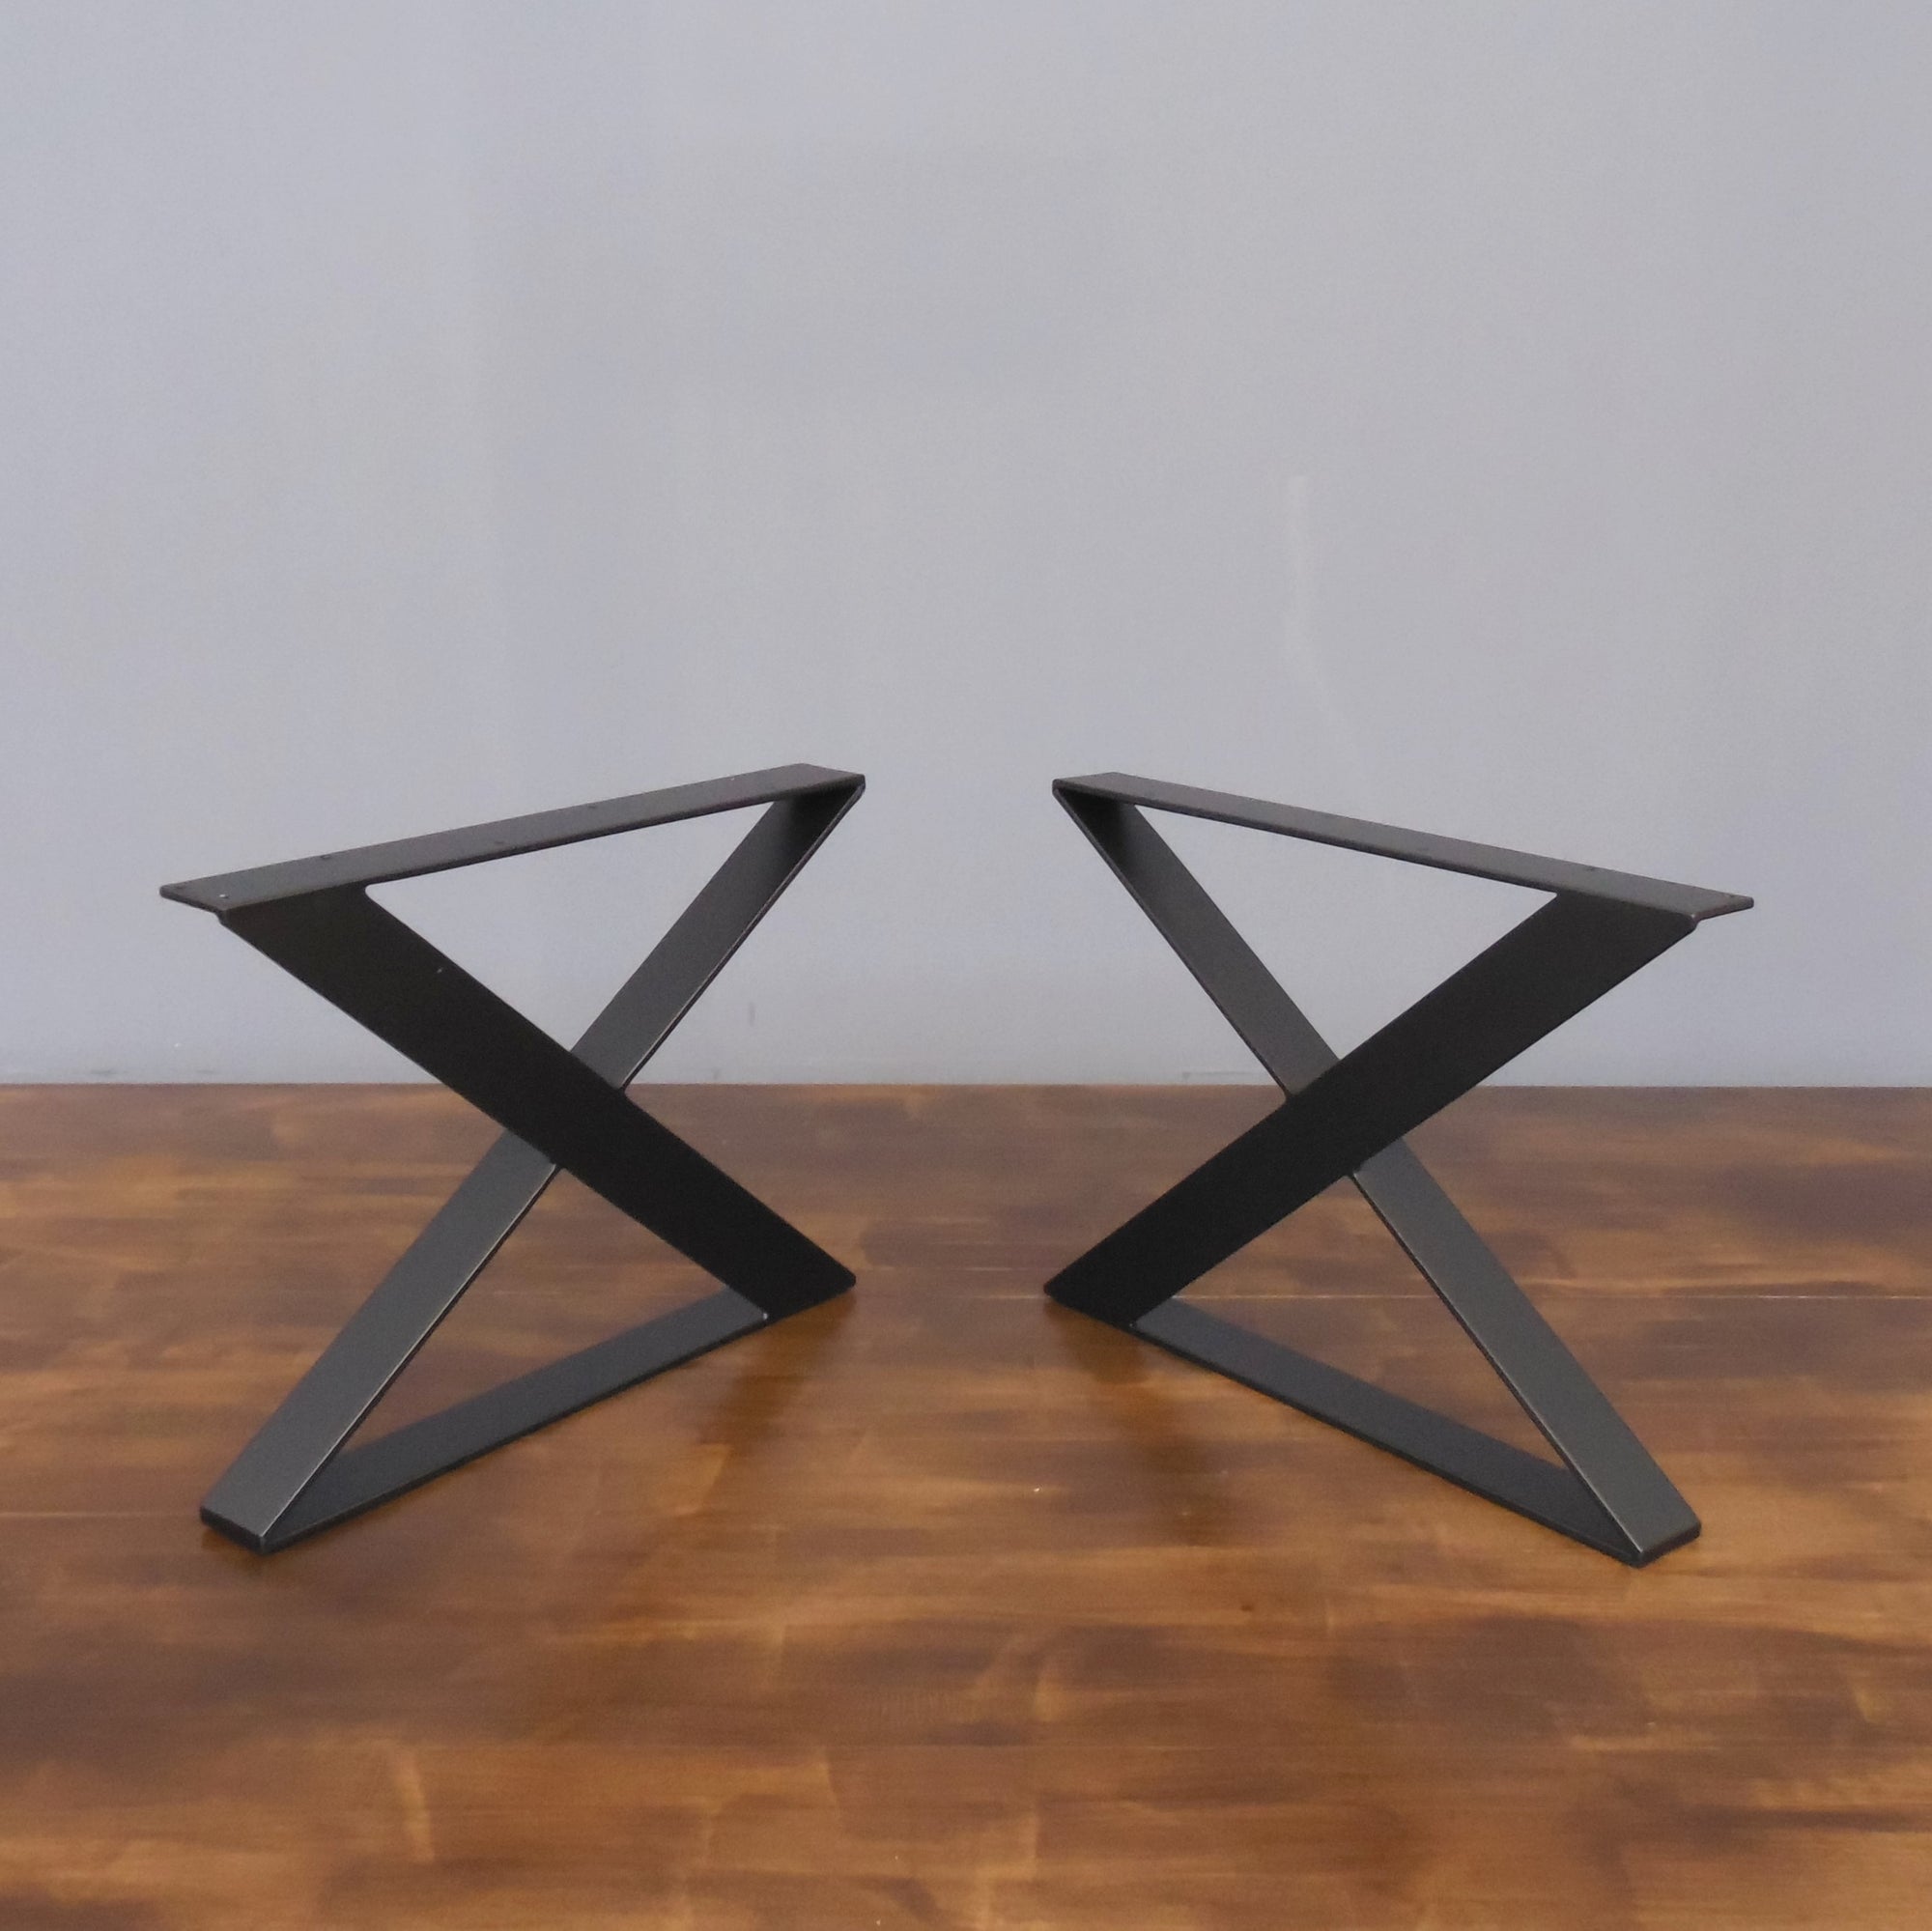 16" X frame Flat Steel Table Legs